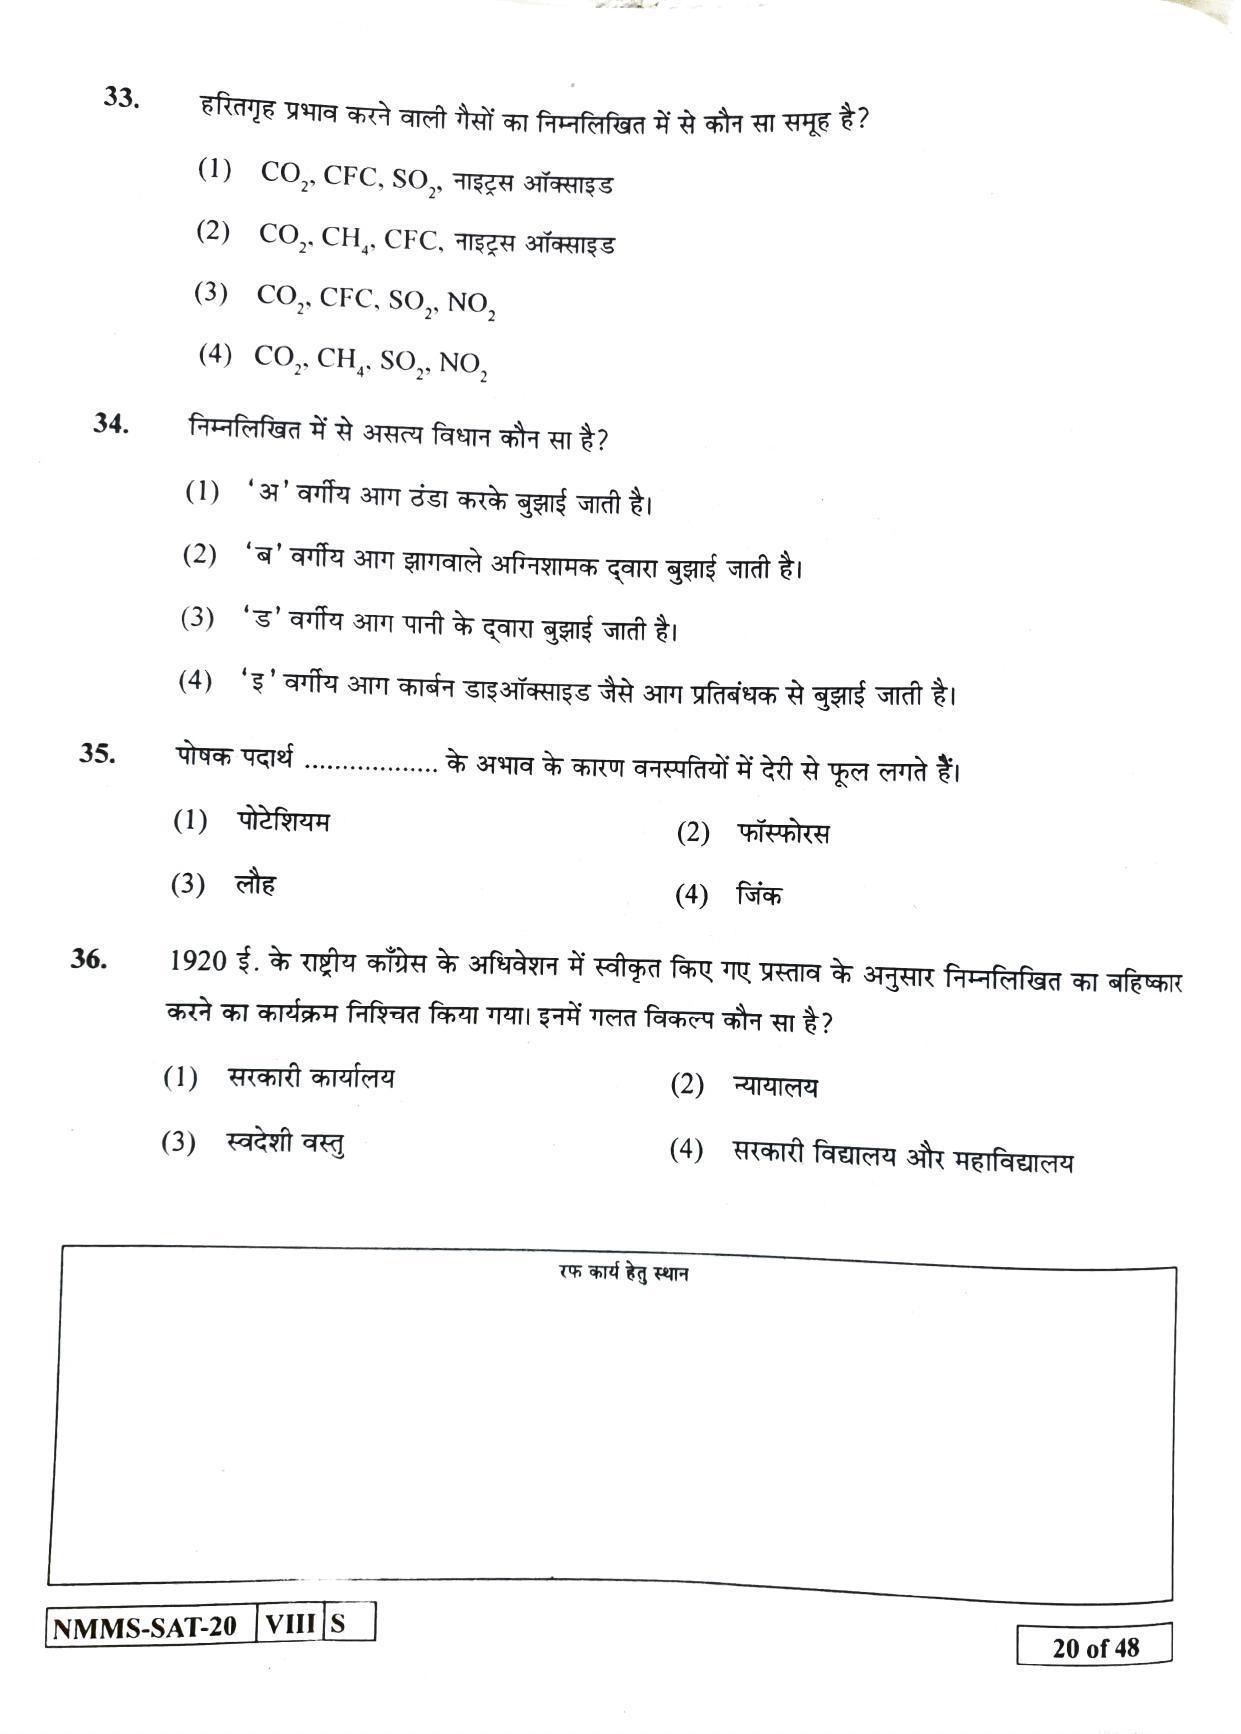 SAT HINDI 2020-21 Class 8 Maharashtra NMMS Question Papers - Page 20